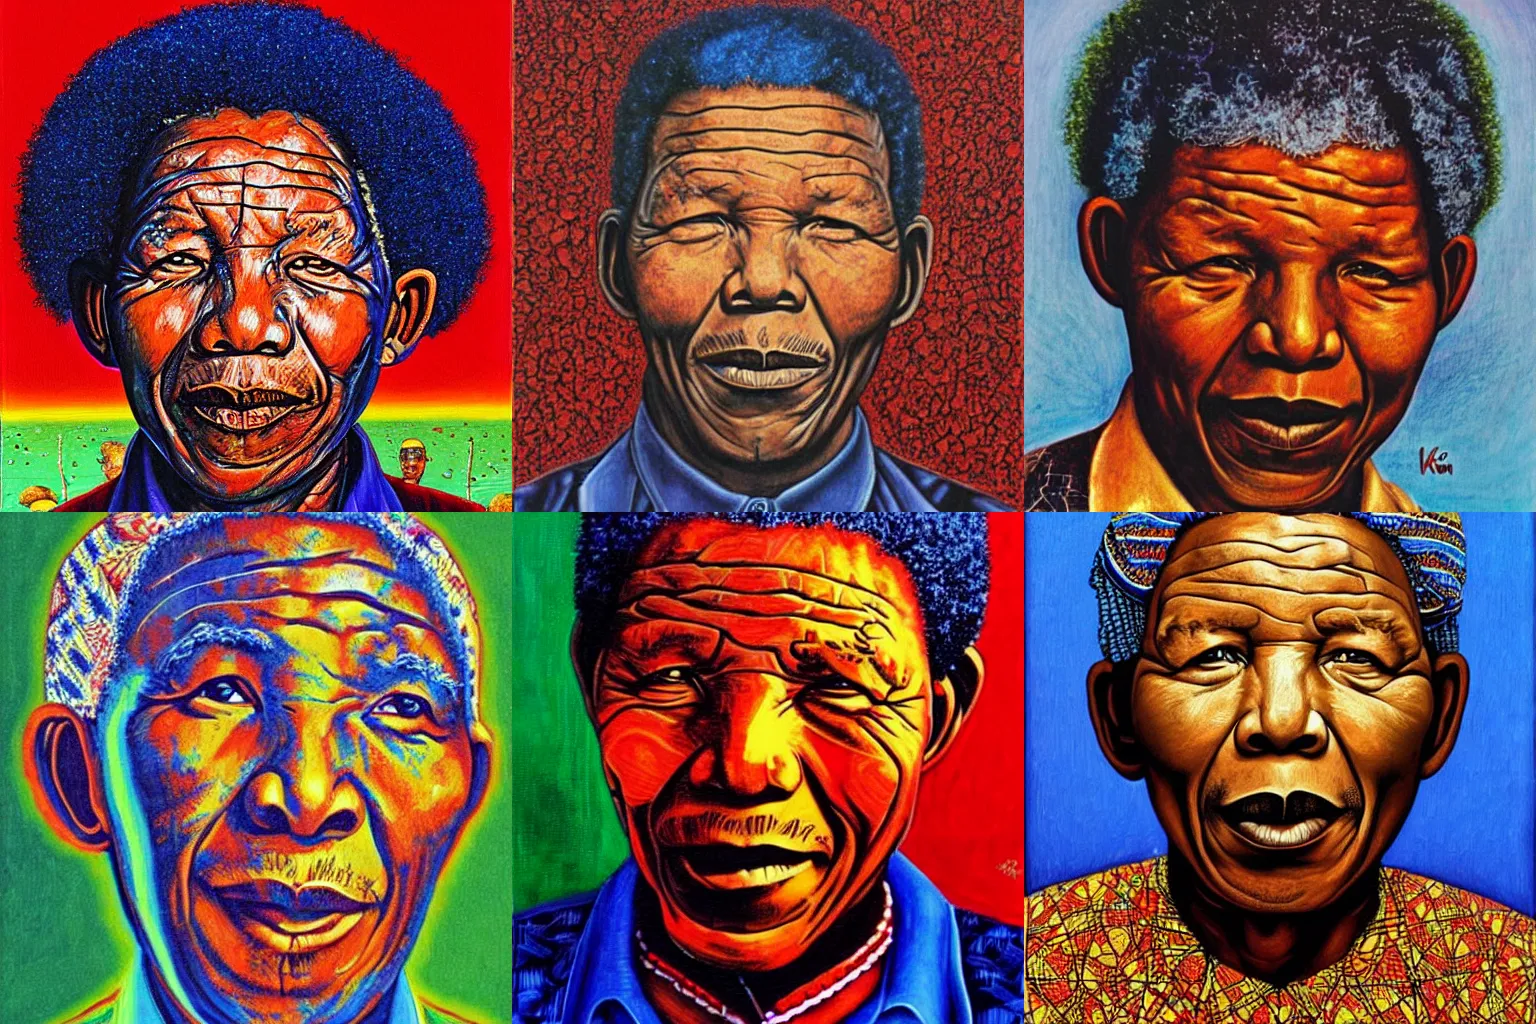 Prompt: a portrait painting of Mandela by Mati Klarwein